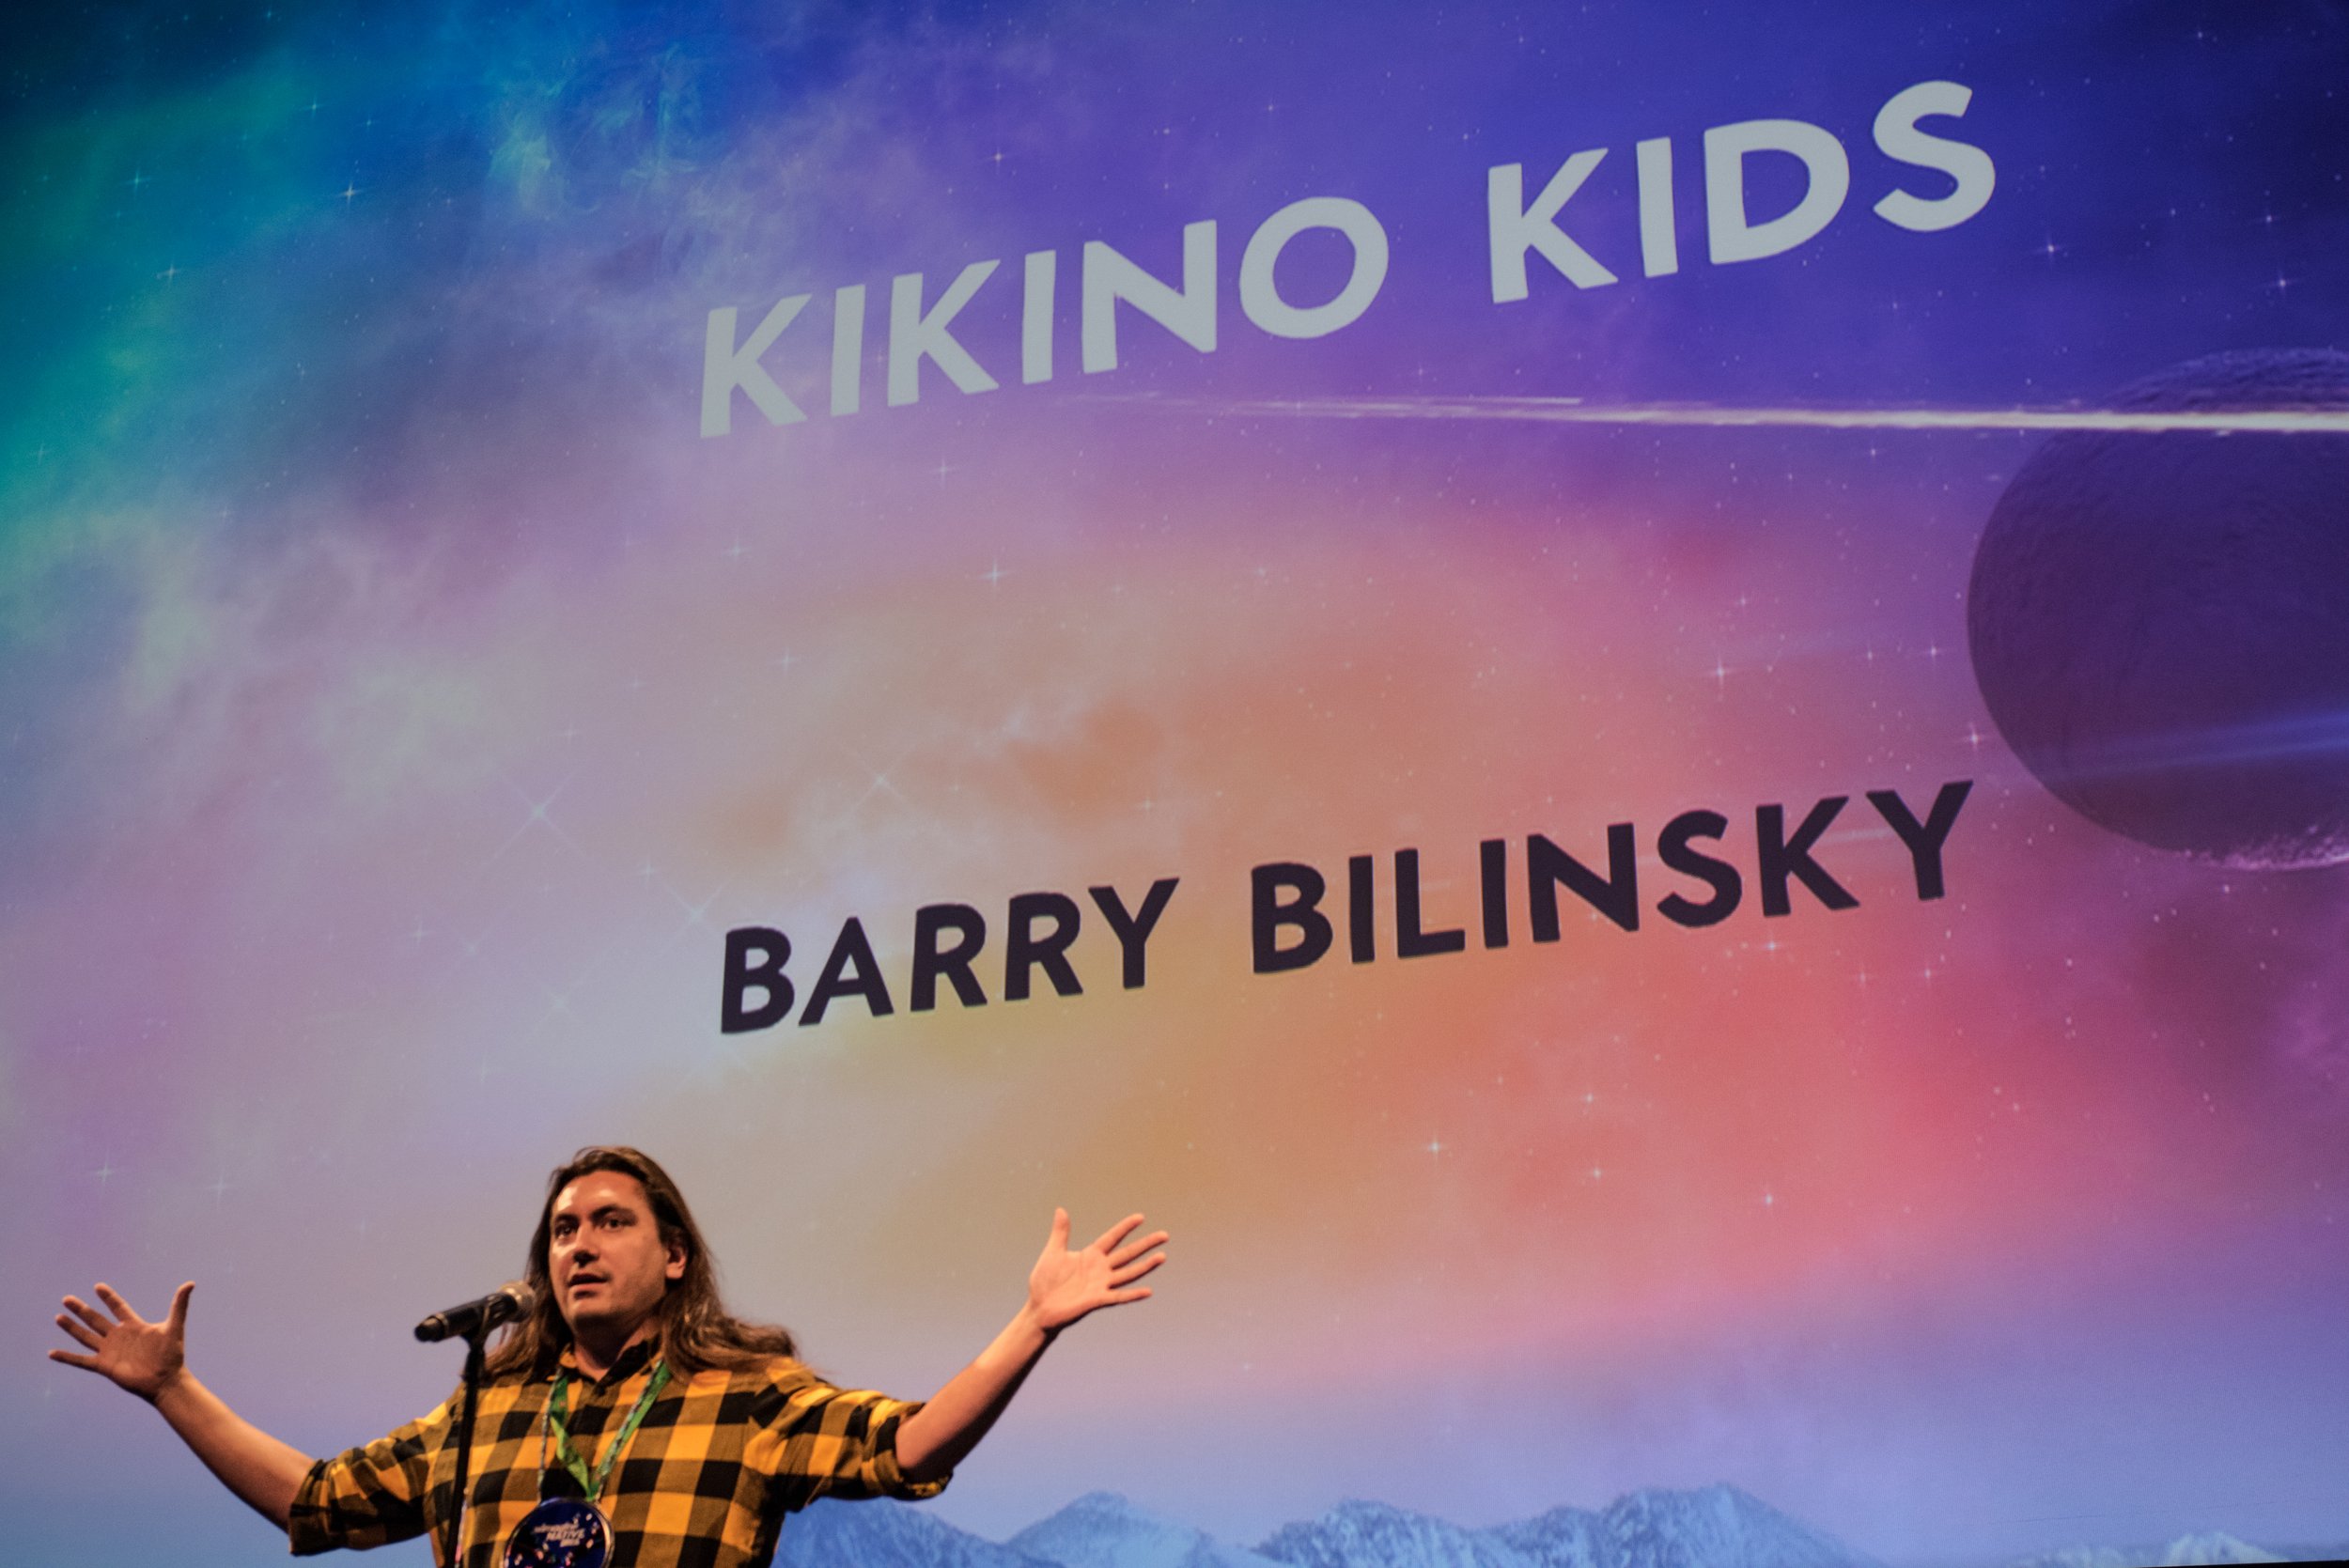 Barry Bilinsky accepting the Moon Jury Award for his film "Kikino Kids". Image by Pengkuei Ben Huang.